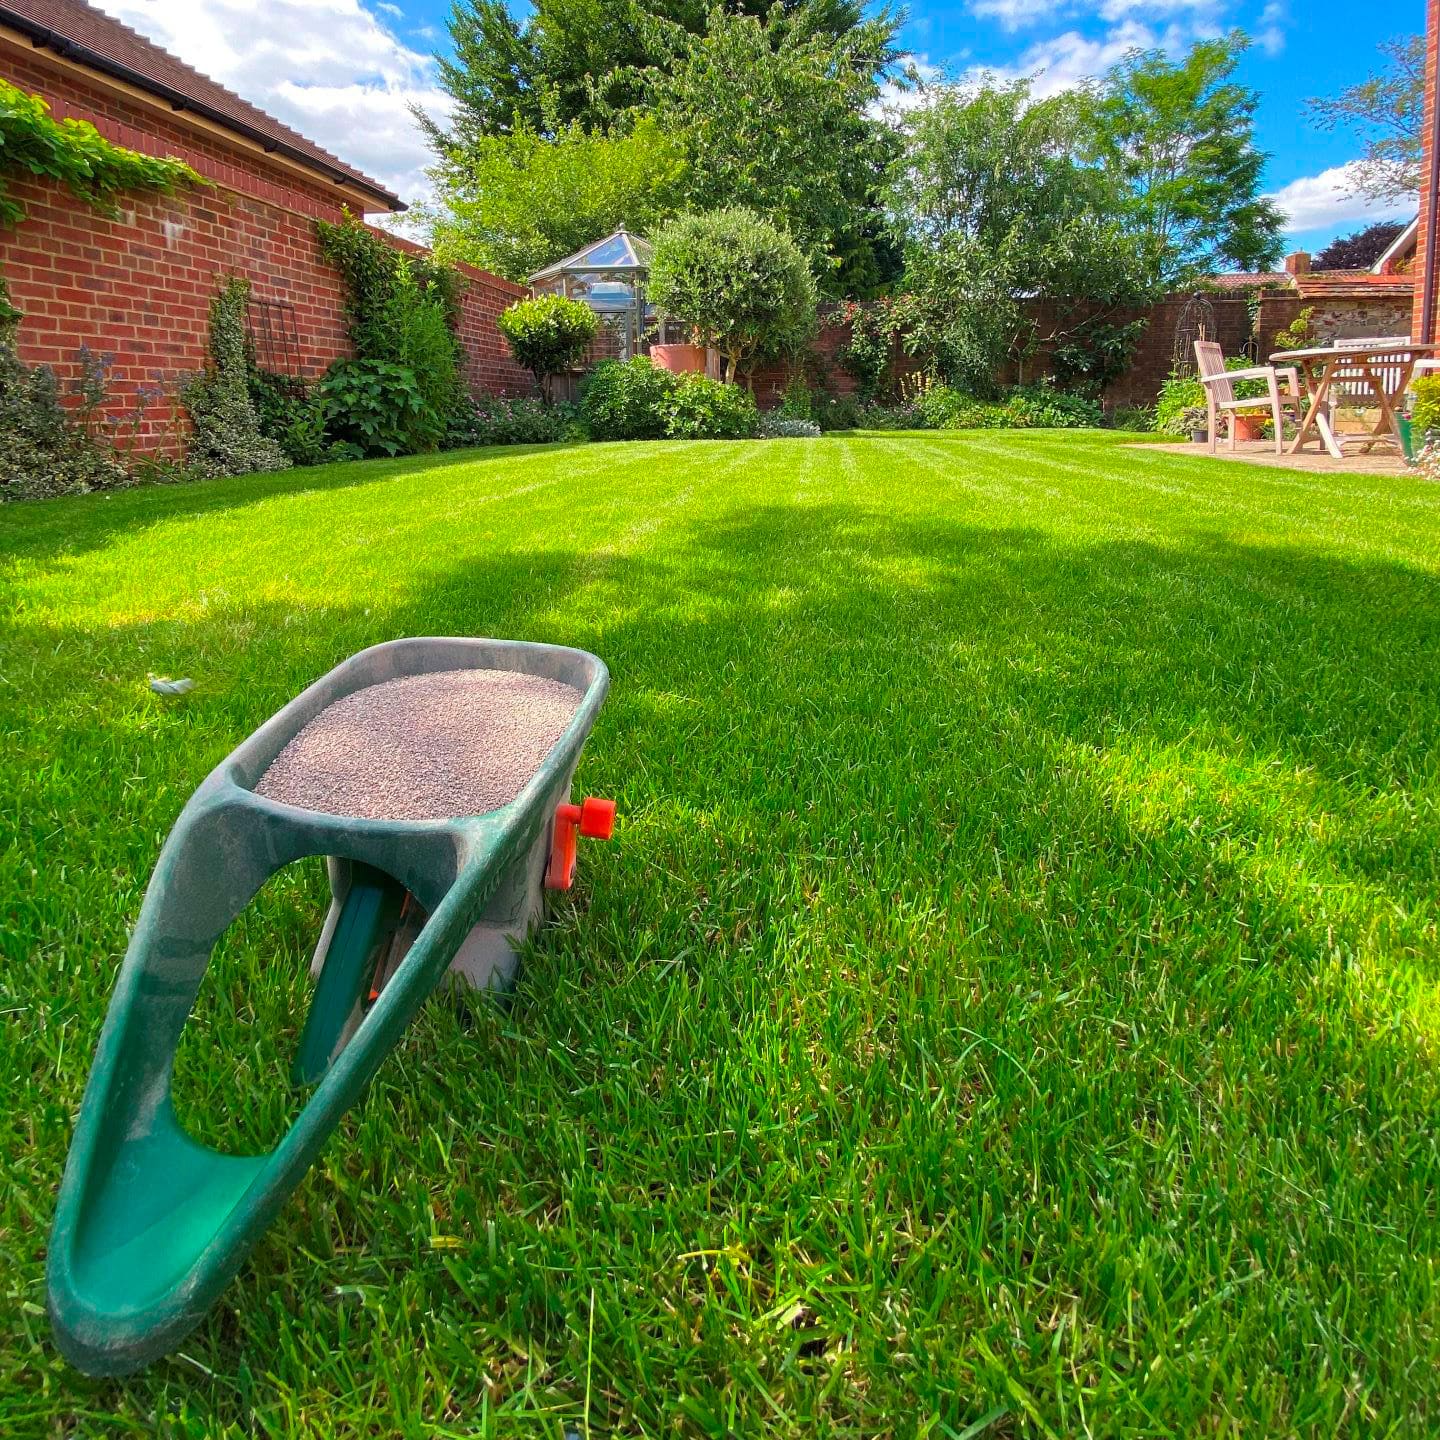 A wheelbarrow with fertiliser ready to apply to a lawn